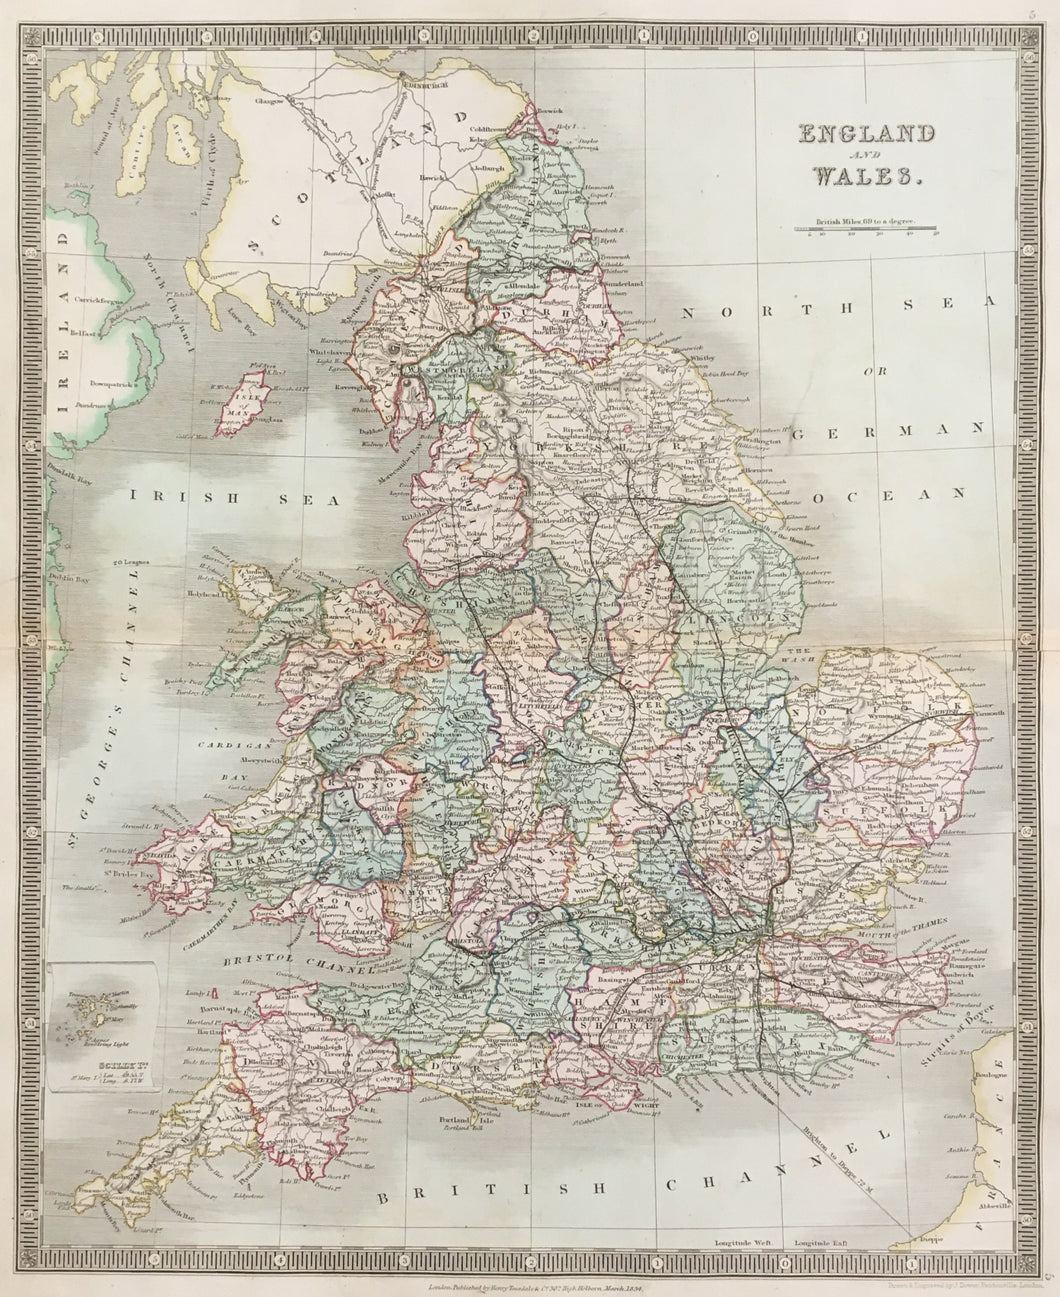 Dower, John “England and Wales